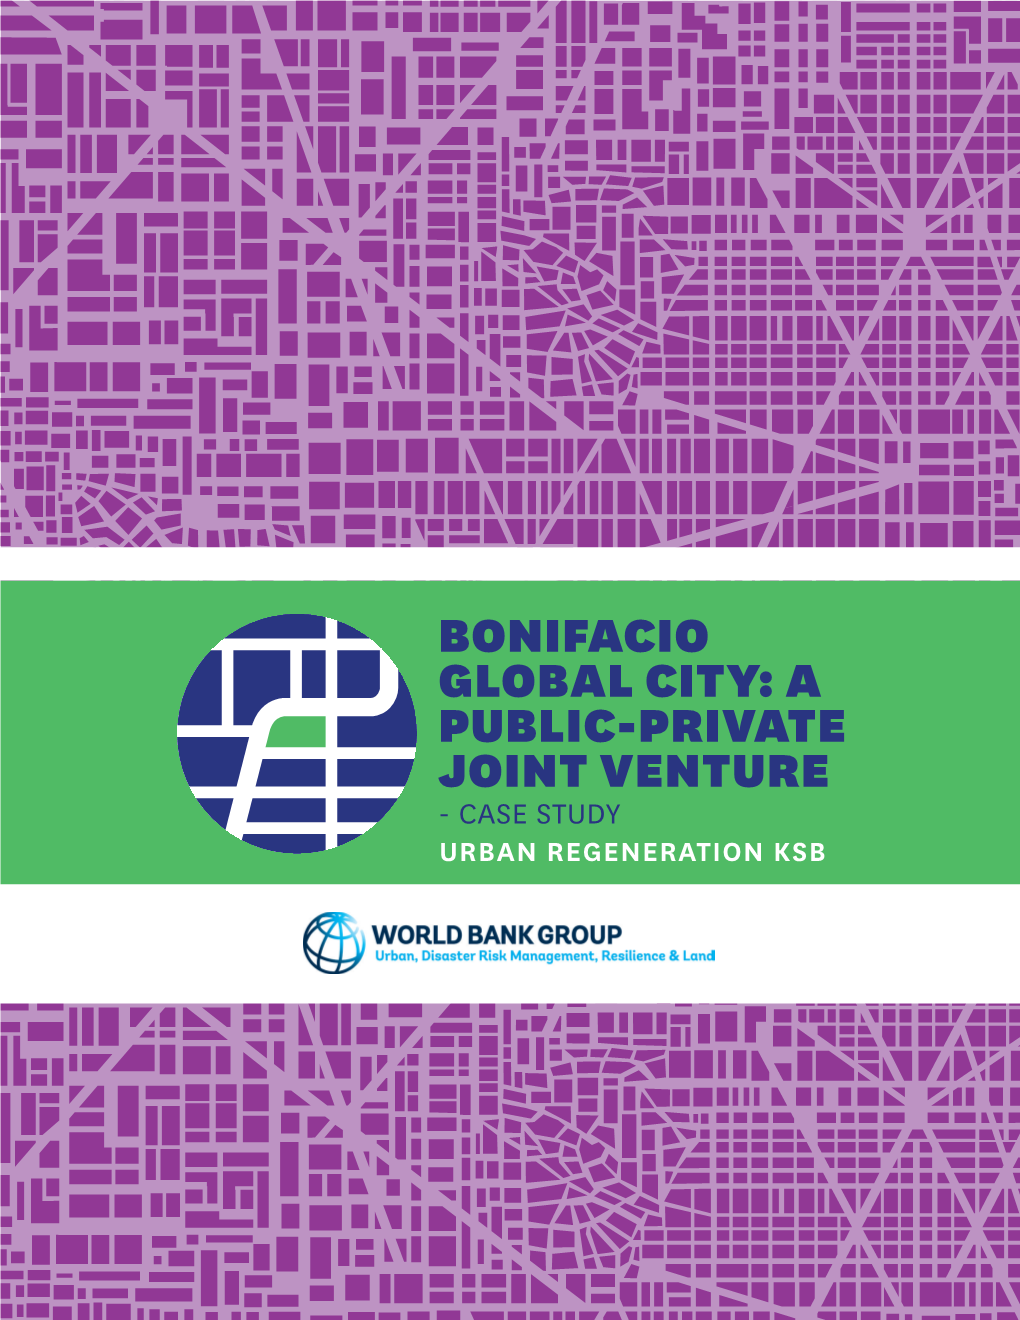 Bonifacio Global City: a Public-Private Joint Venture - Case Study Urban Regeneration Ksb